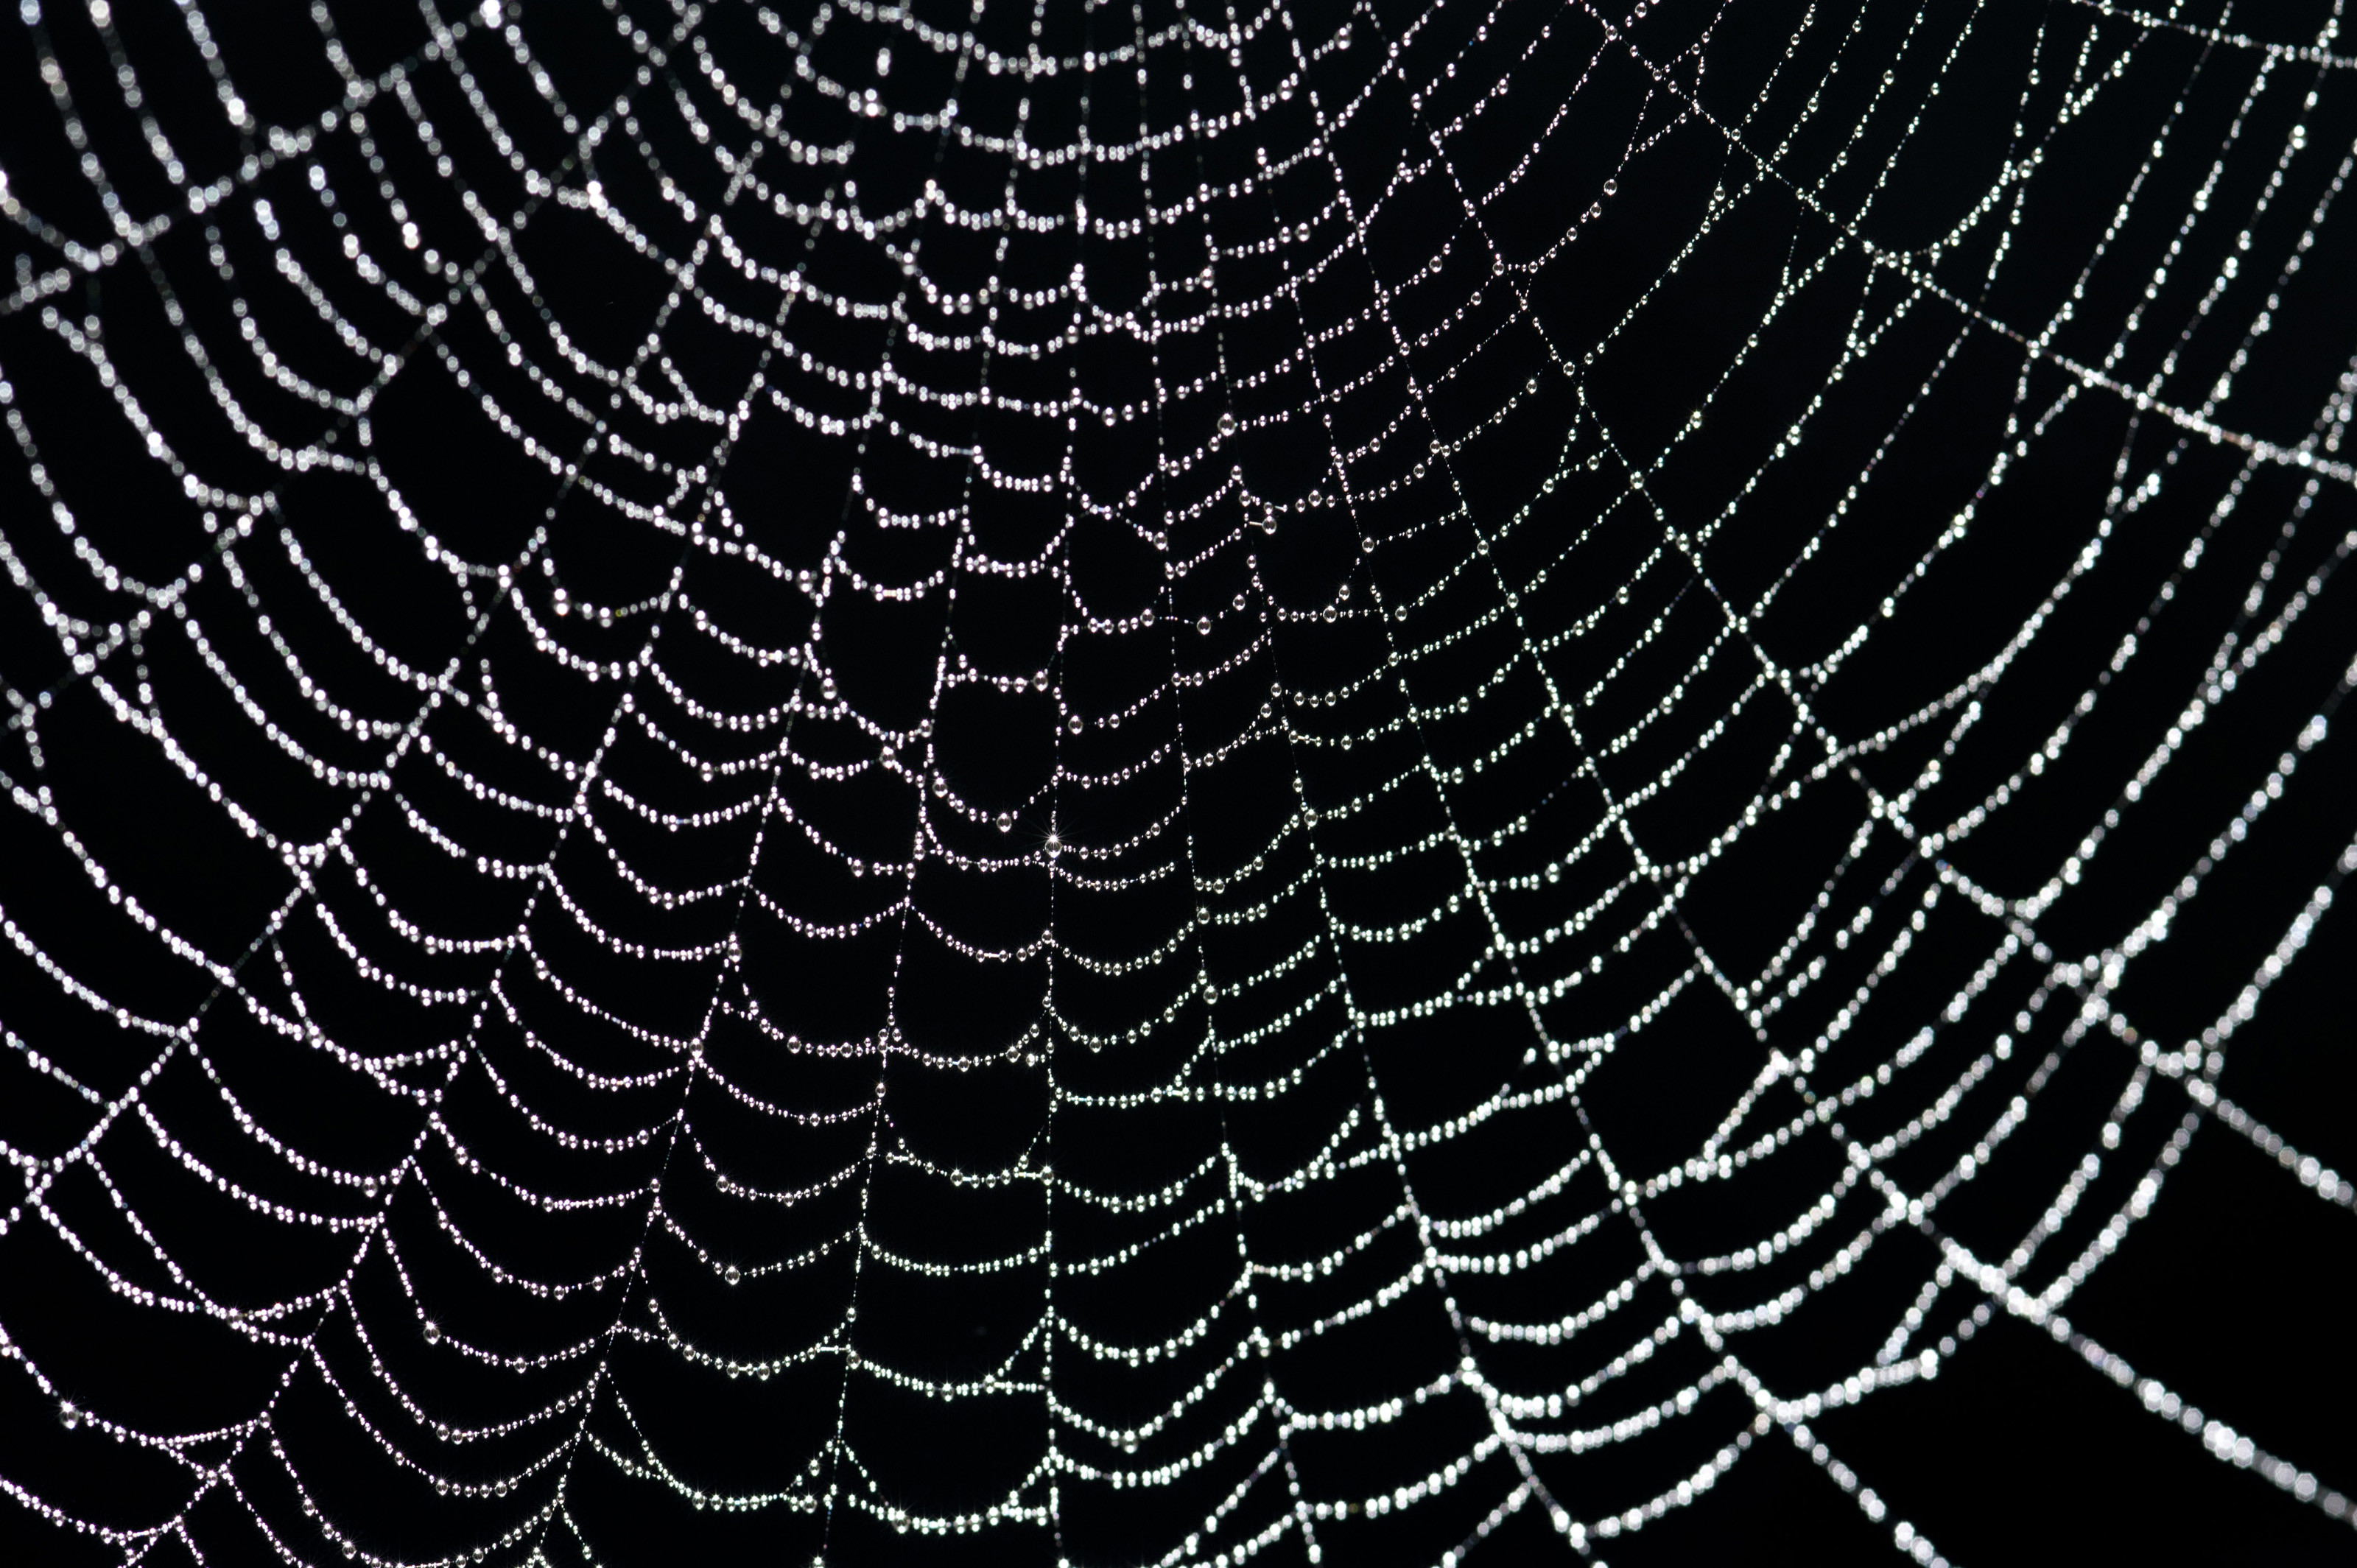 Spider Web Backgrounds (34+ images)